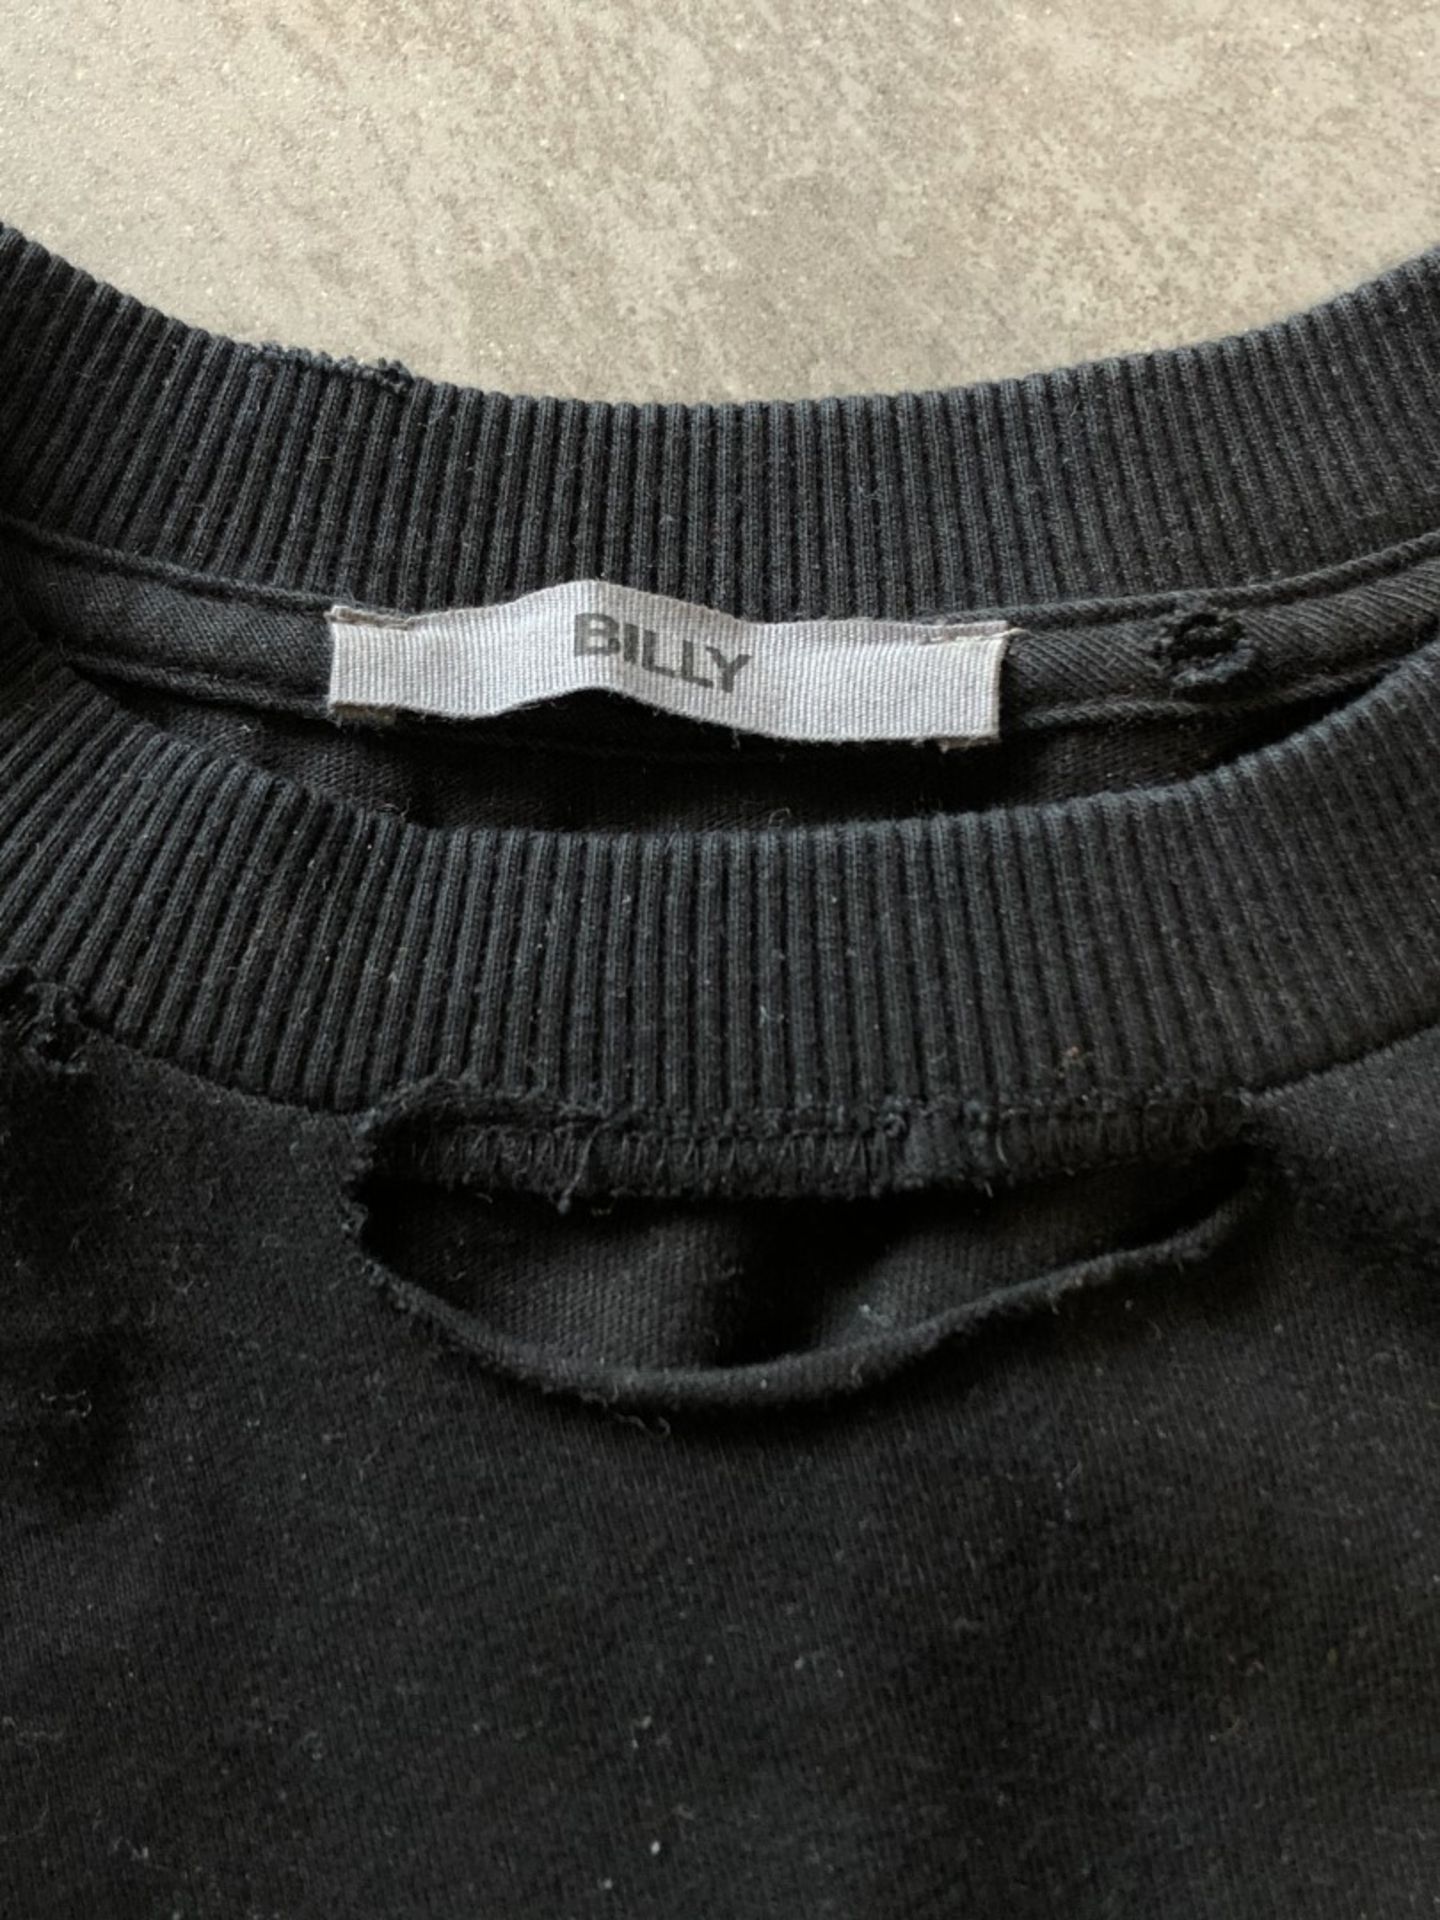 1 x Men's Genuine Billy Designer Distressed T-Shirt In Black "Billy" - SIZE: LARGE - Image 4 of 8